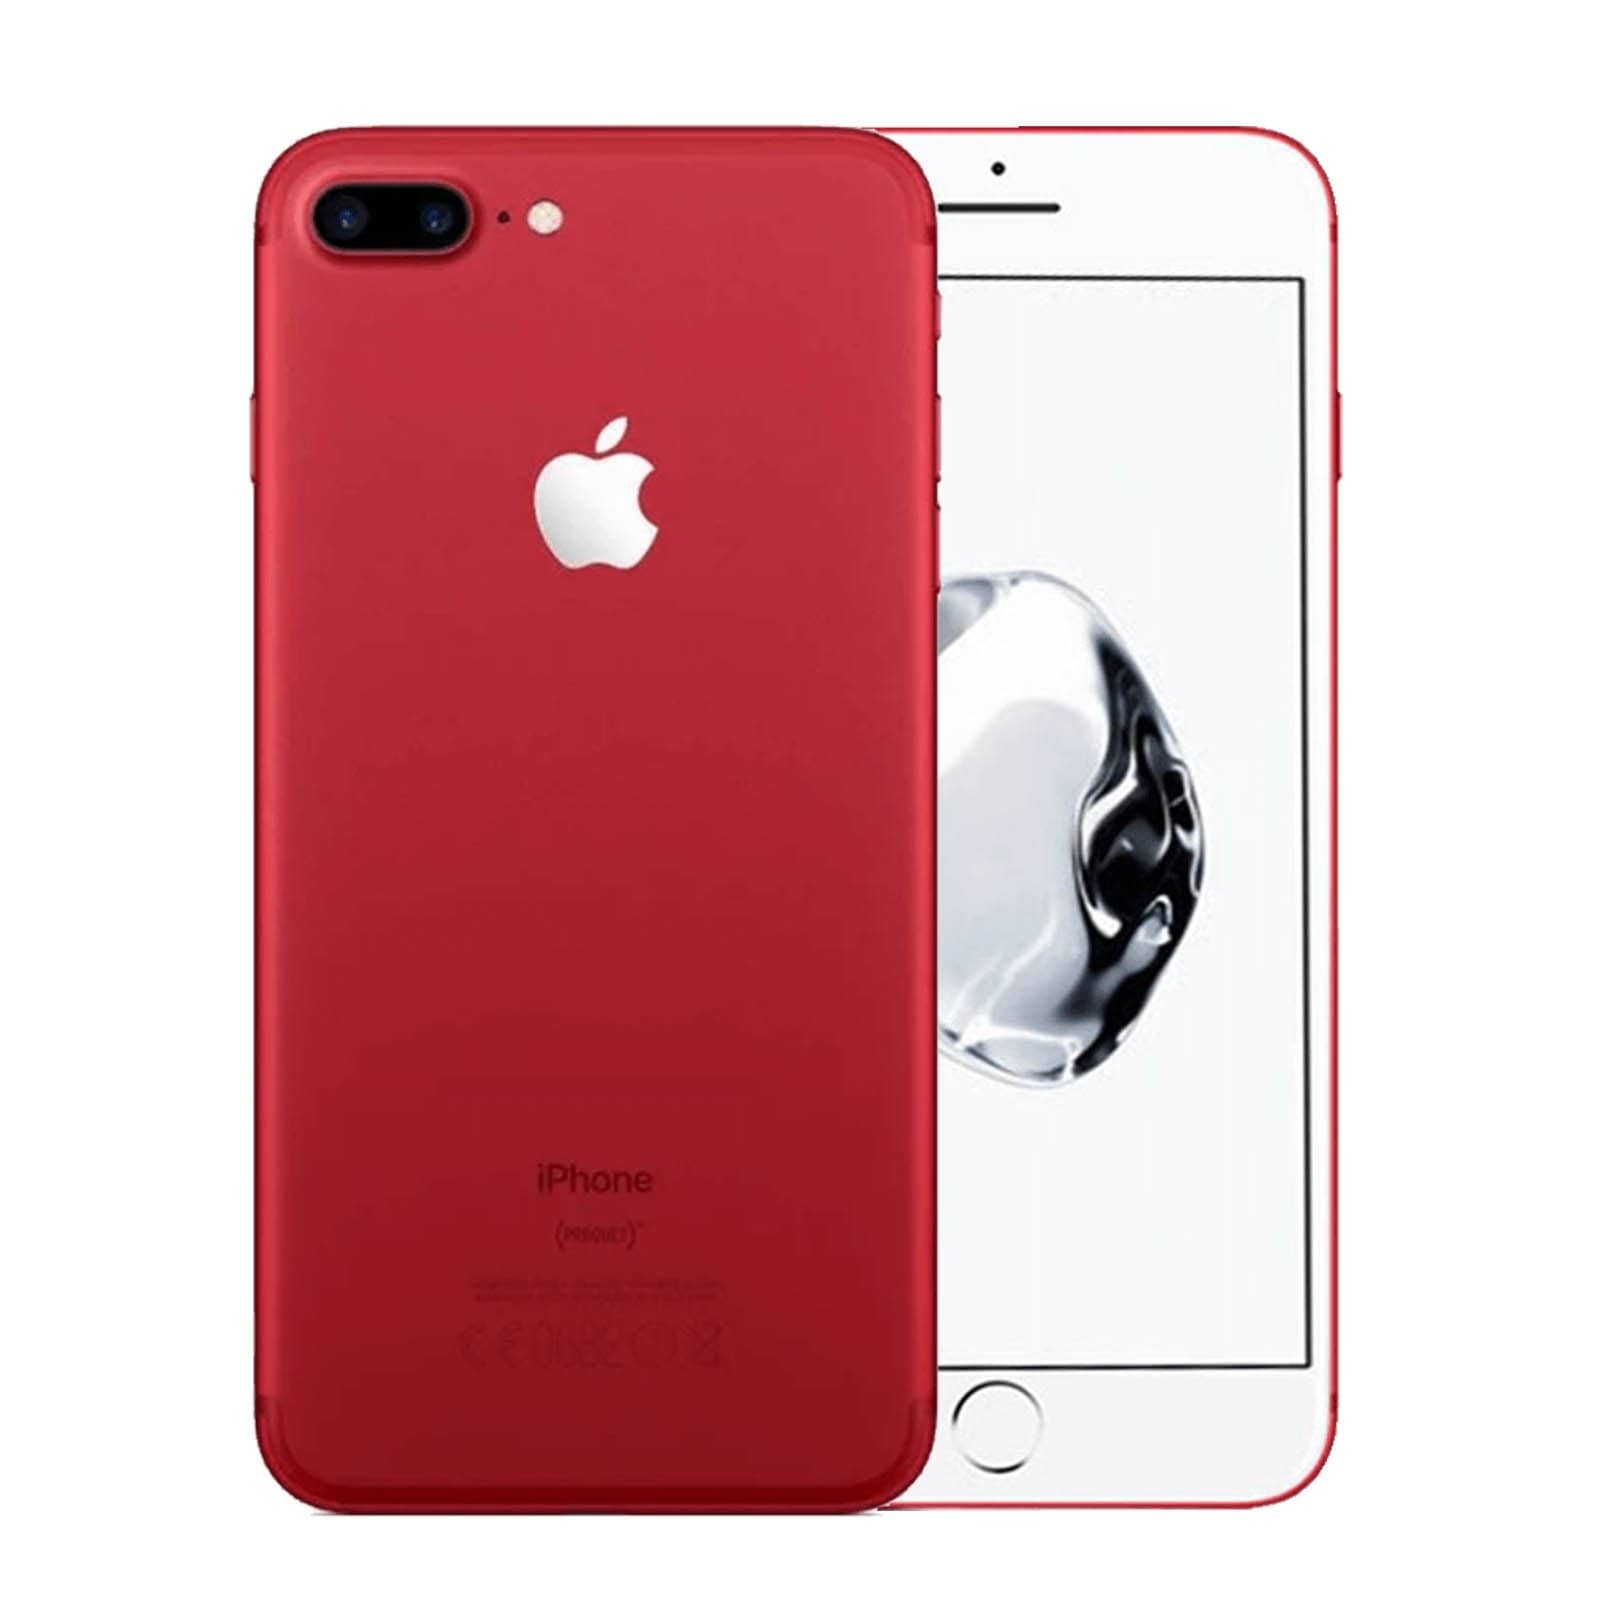 Apple iPhone 7 Plus 128GB Product Red Good - Unlocked